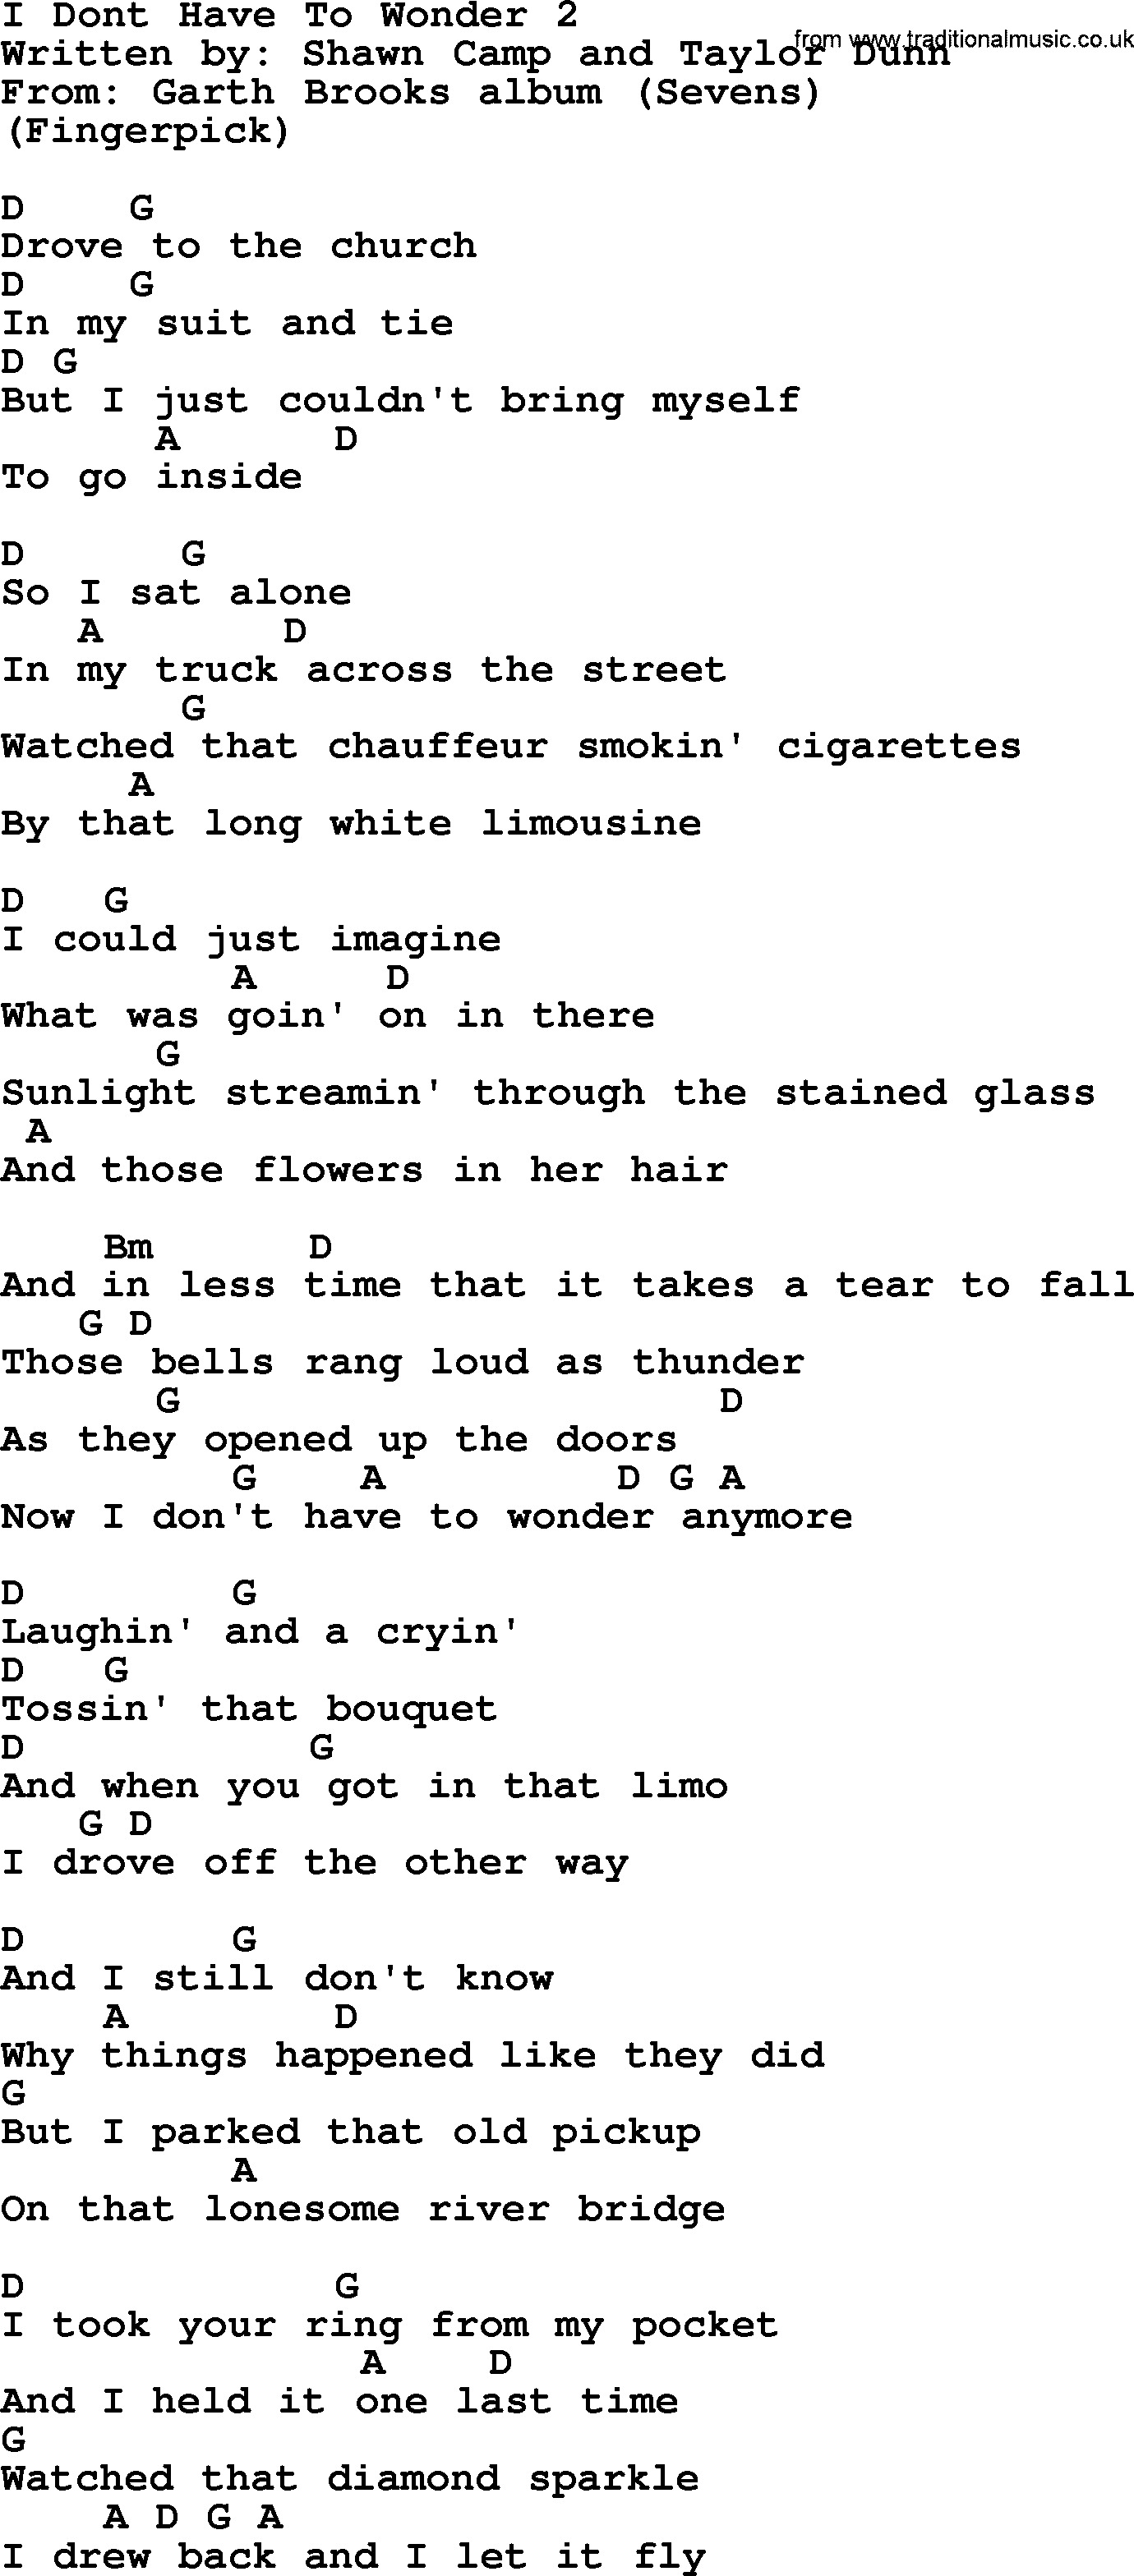 Garth Brooks song: I Dont Have To Wonder 2, lyrics and chords